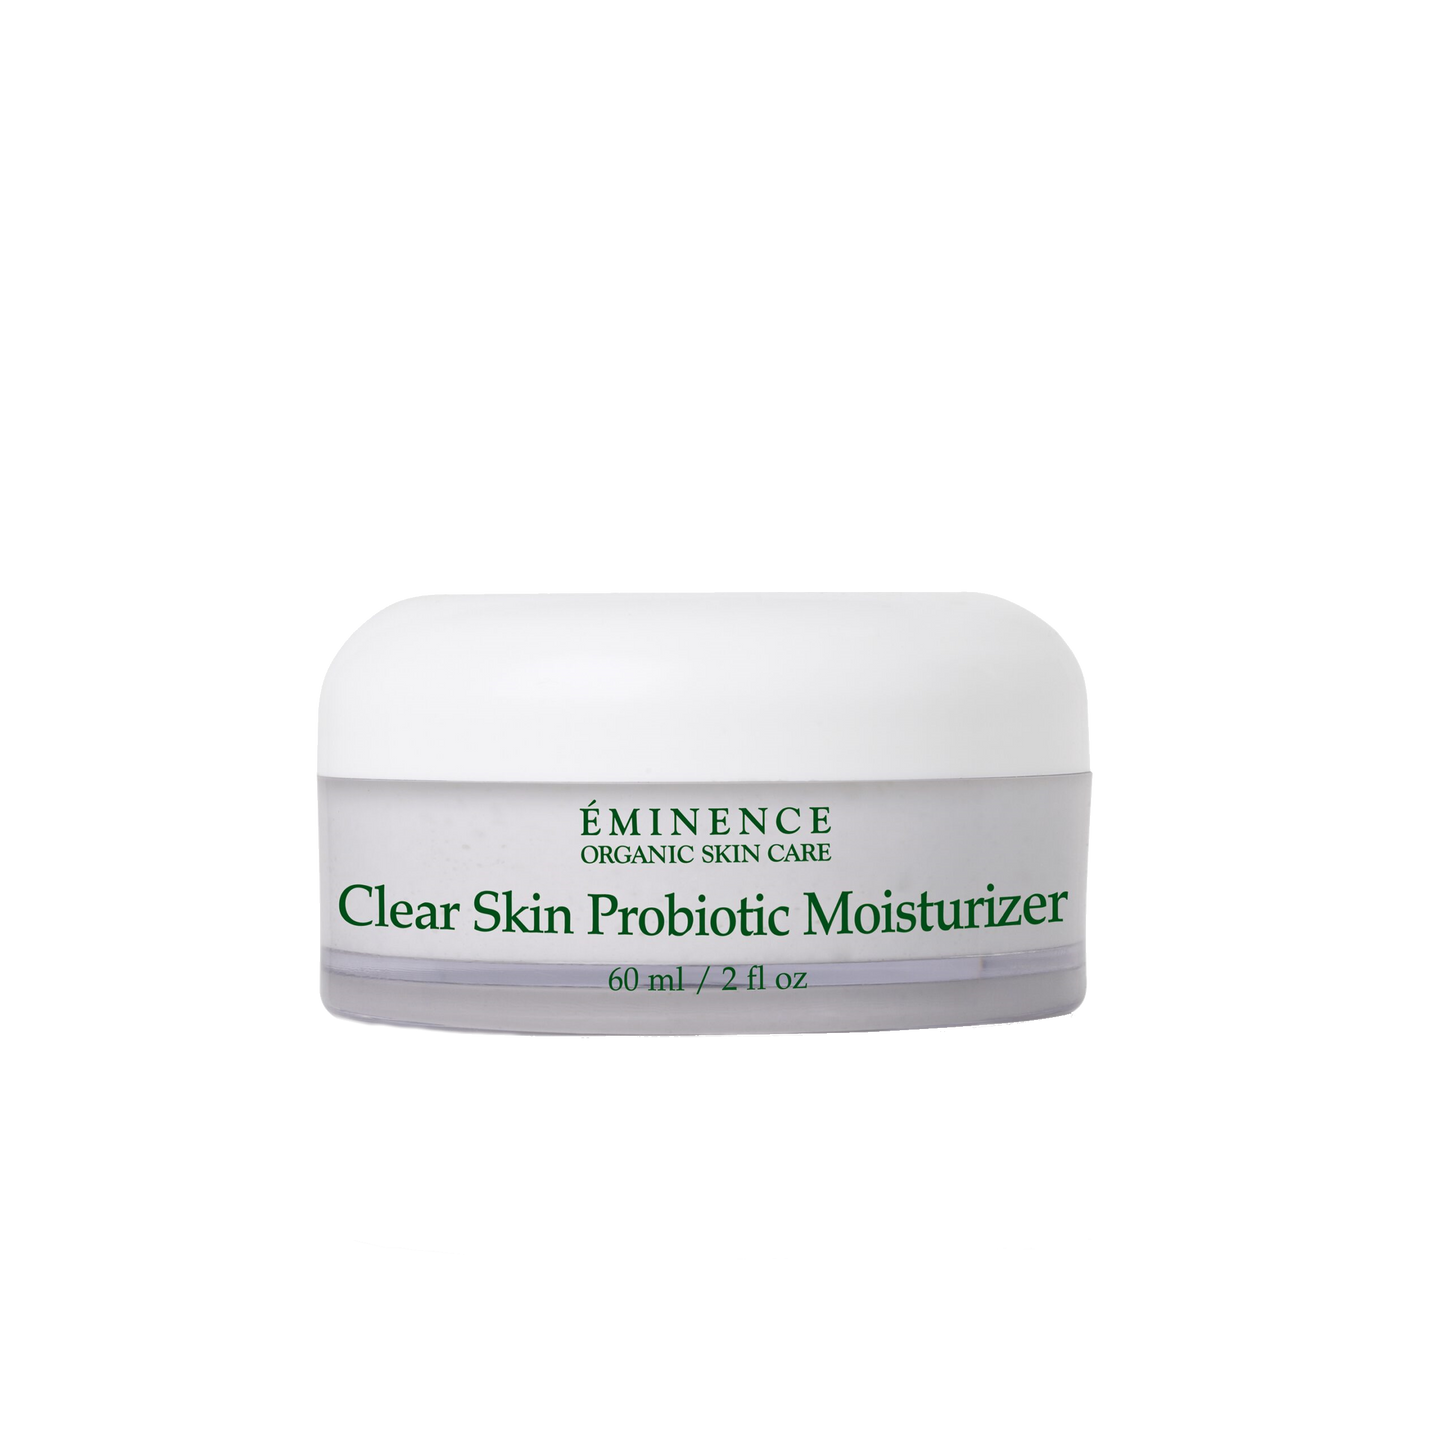 Clear Skin Probiotic Moisturizer ingrediënten